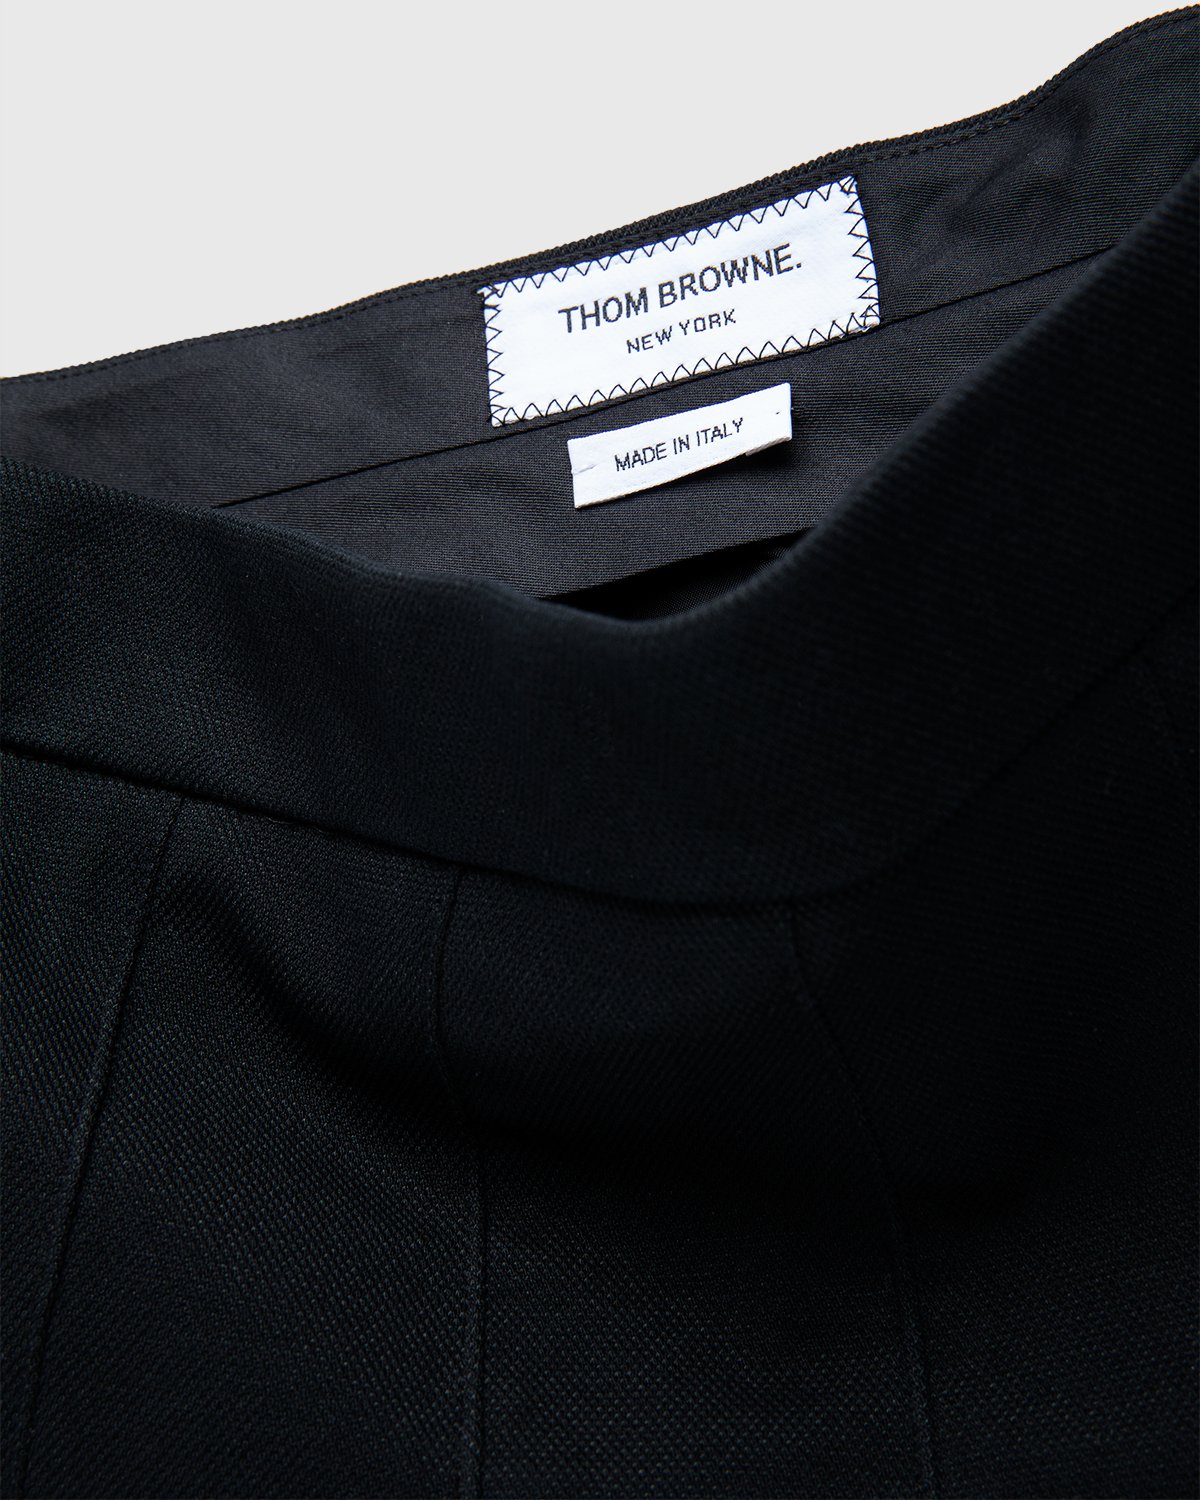 Thom Browne x Highsnobiety - Men's Pleated Mesh Skirt Black - Clothing - Black - Image 5